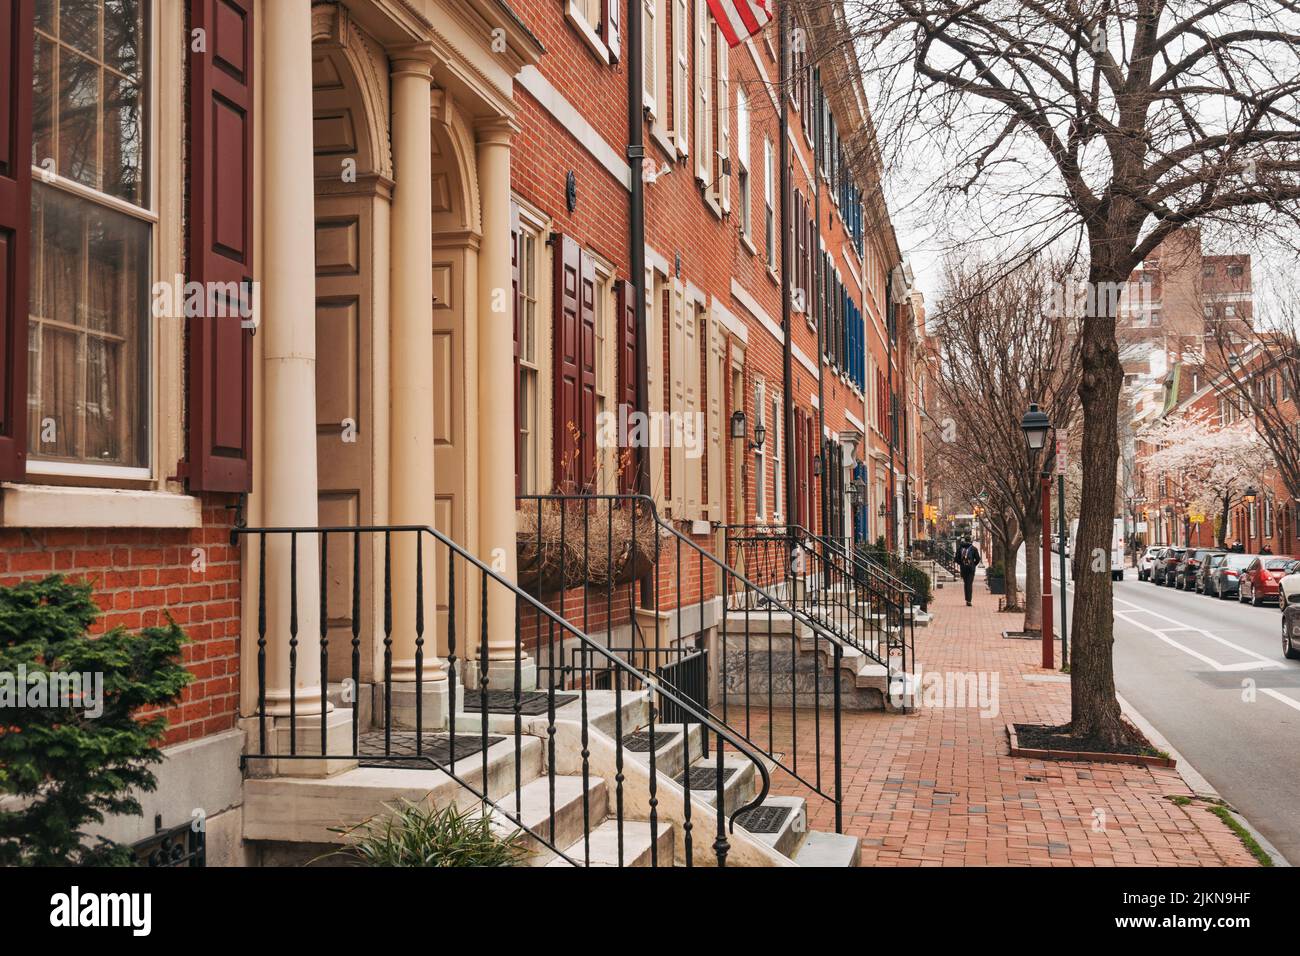 Neat and tidy brick row houses on Spruce Street in Philadelphia, USA Stock Photo